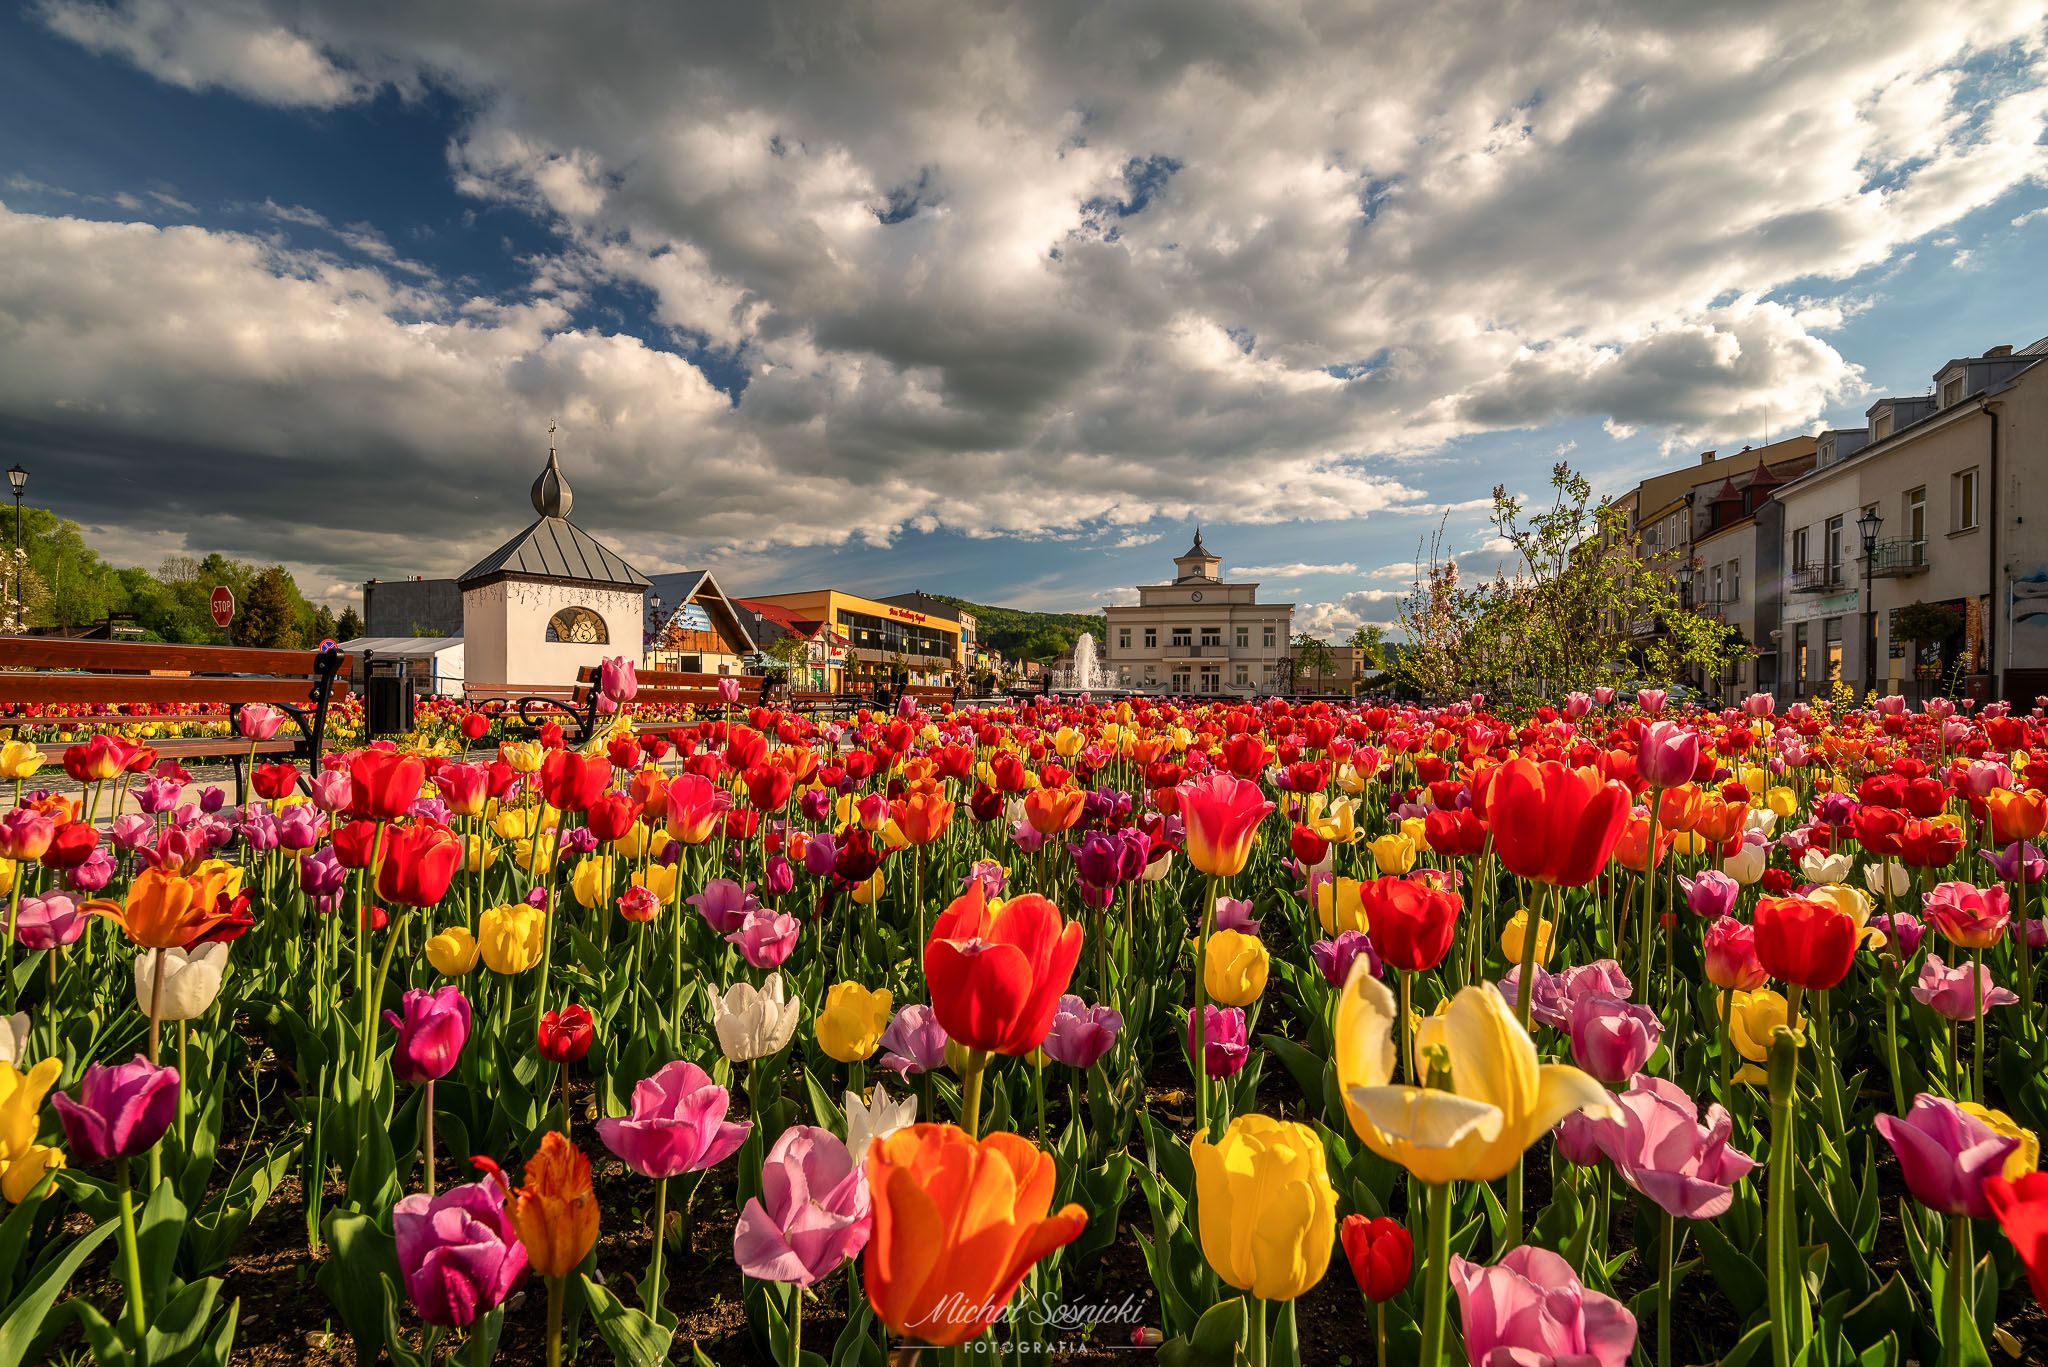 #poland #flowers #city #muszyna #tulips #nature #photo #best #benro @benq #pentax, Michał Sośnicki